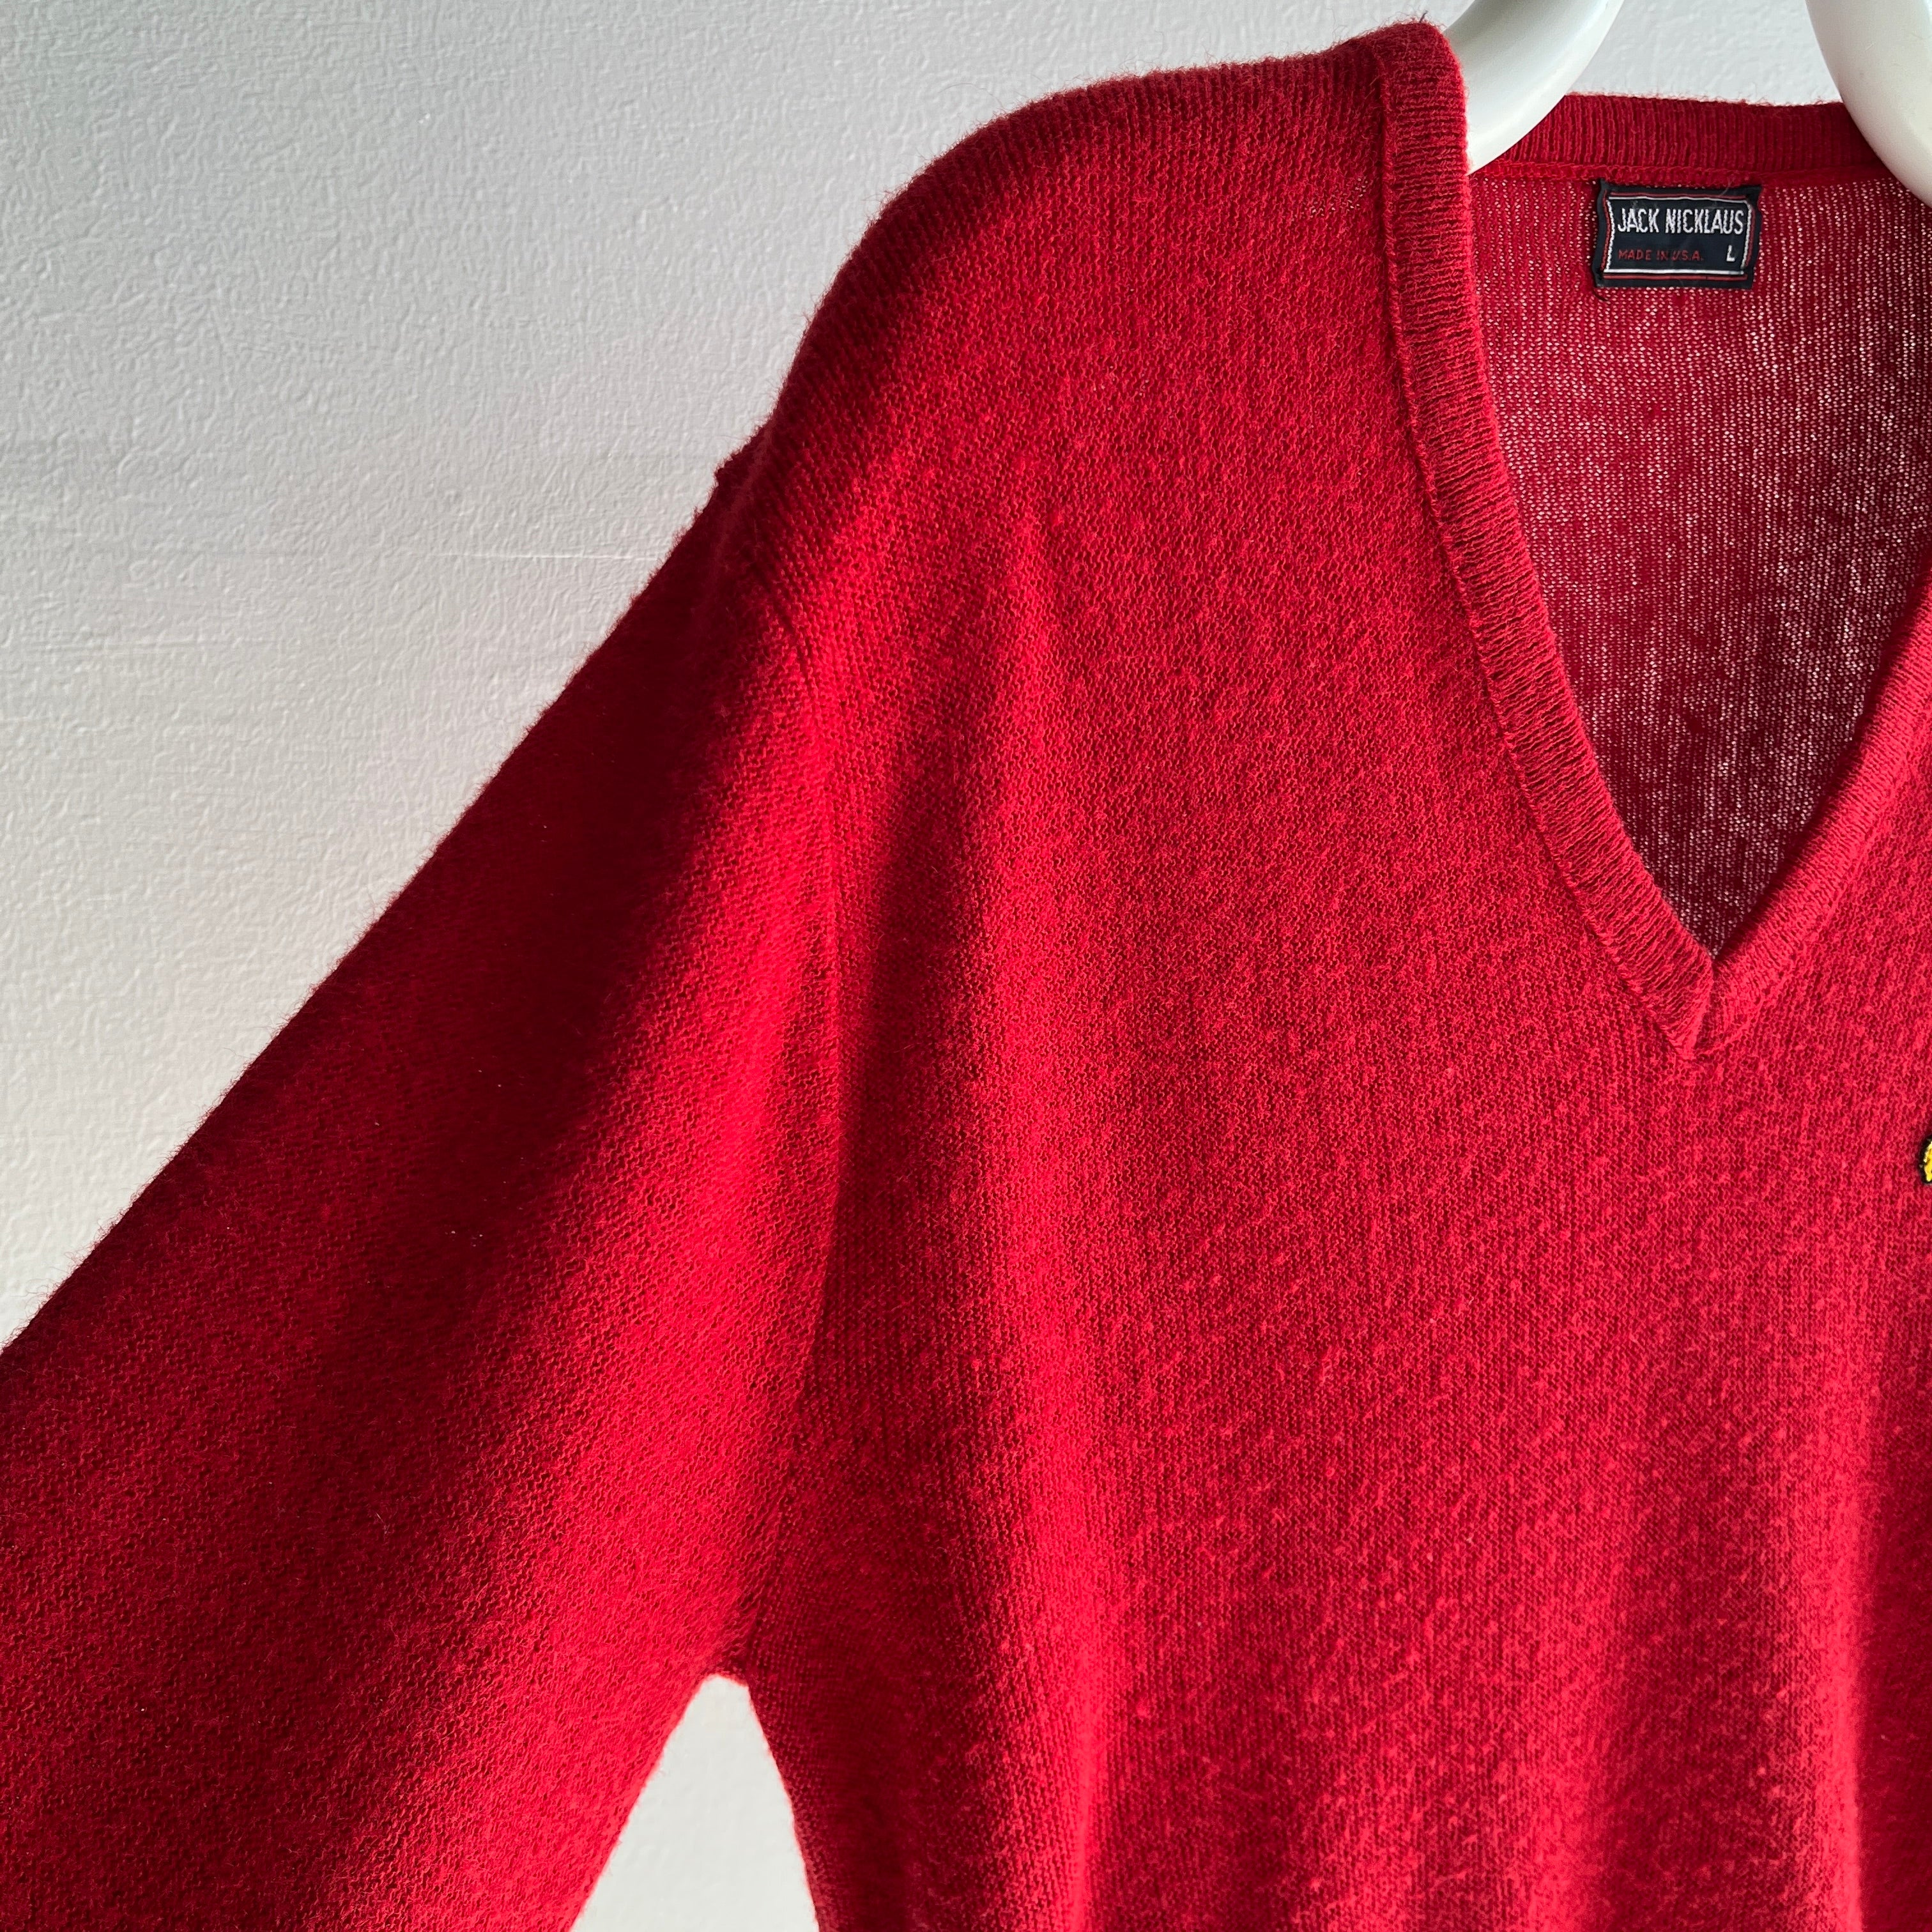 1970s Jack Nicklaus Golden Bear V-Neck Sweater (Very Lacoste)